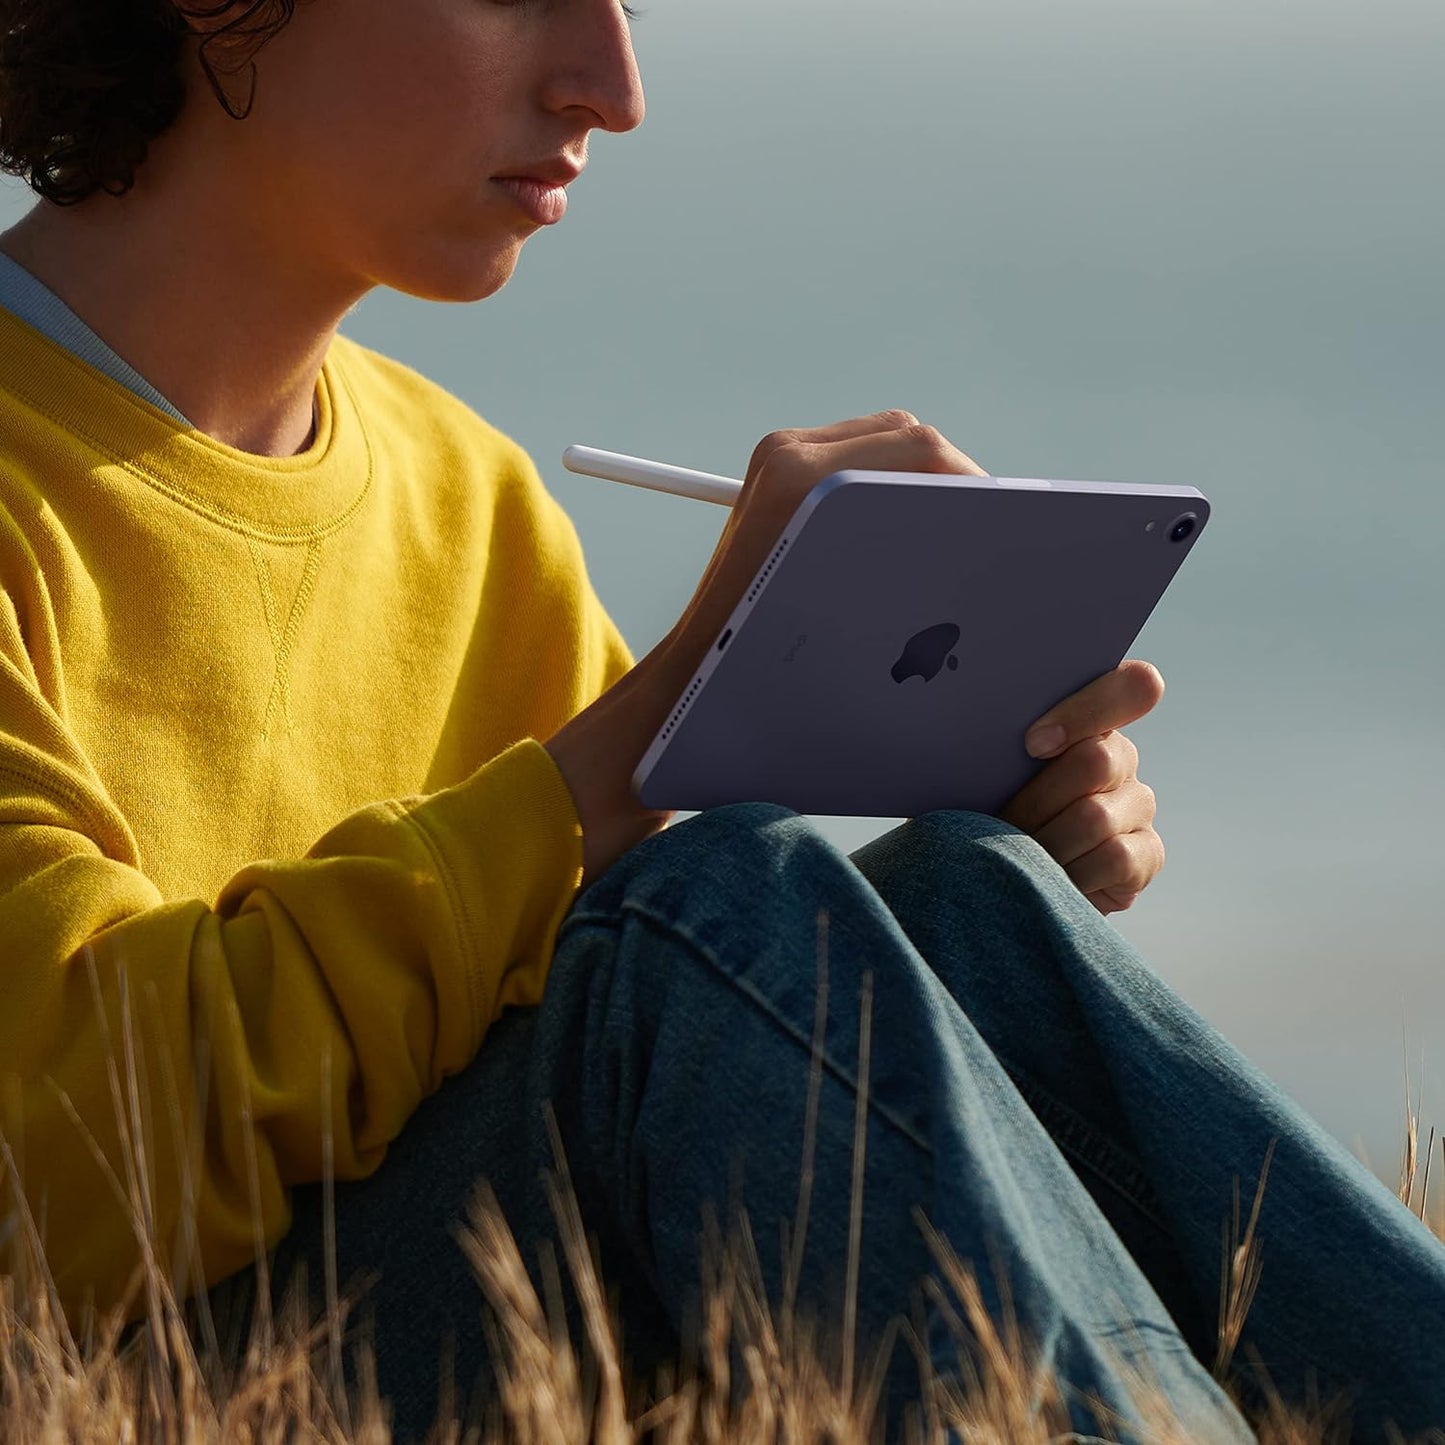 Apple 2021 iPad mini (8.3-inch, Wi-Fi, 256GB) - Space Grey (6th Generation)